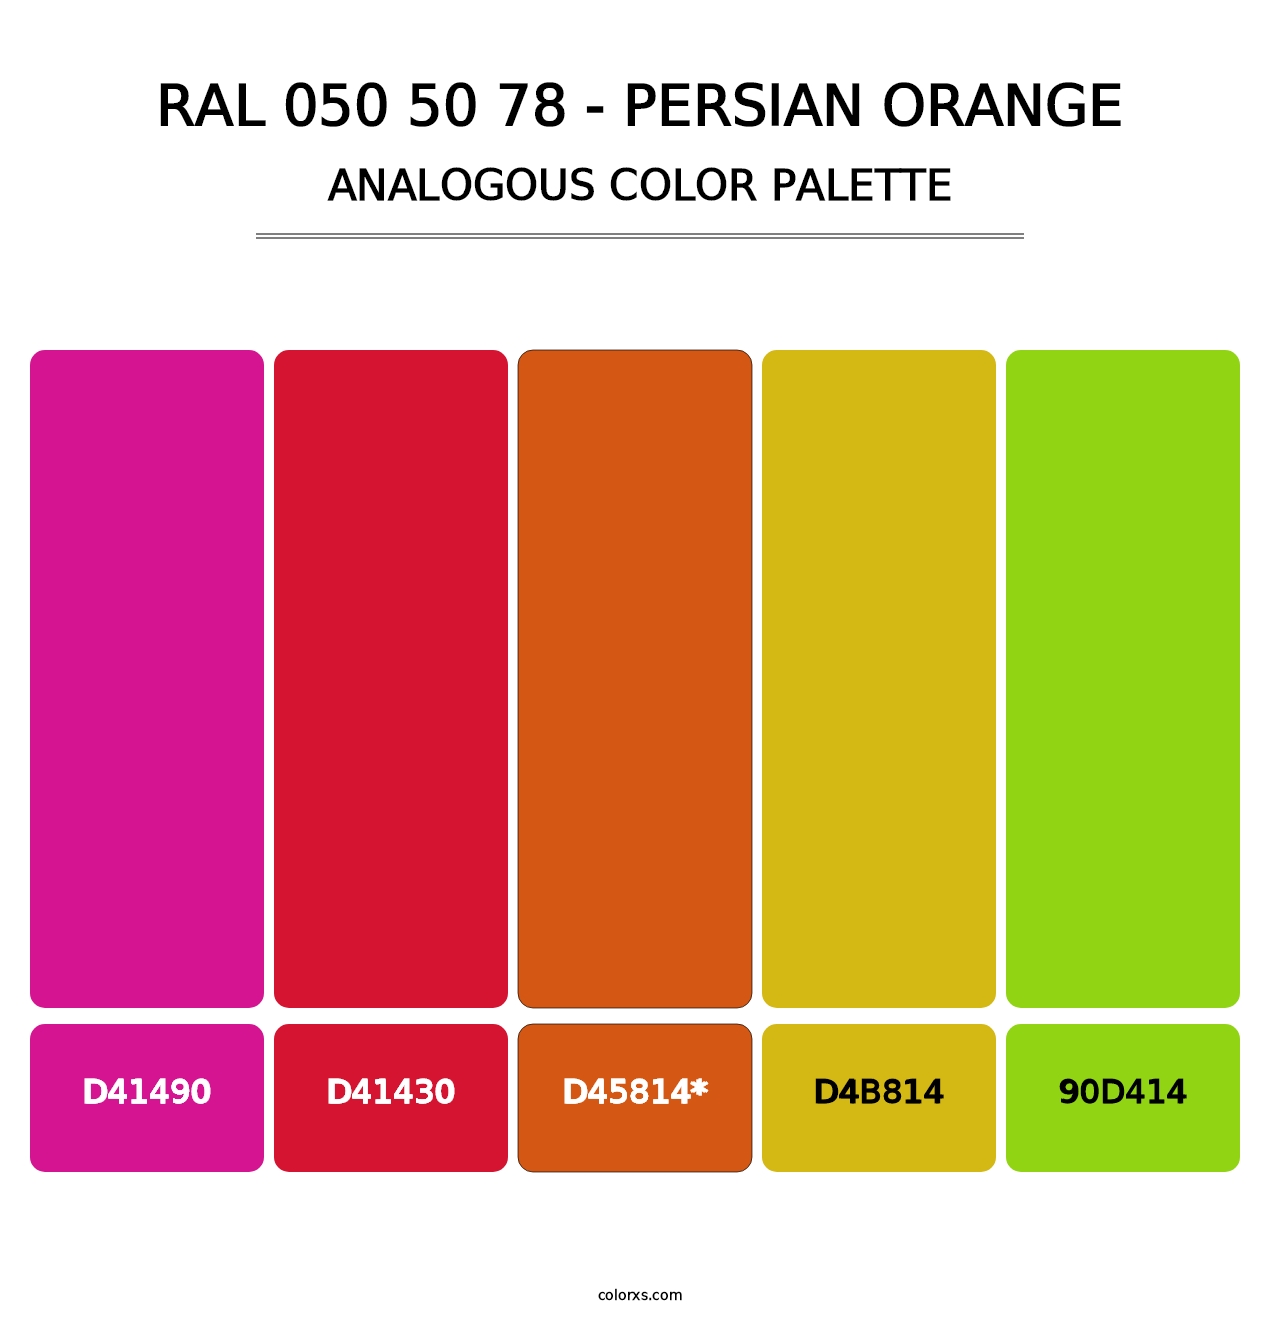 RAL 050 50 78 - Persian Orange - Analogous Color Palette